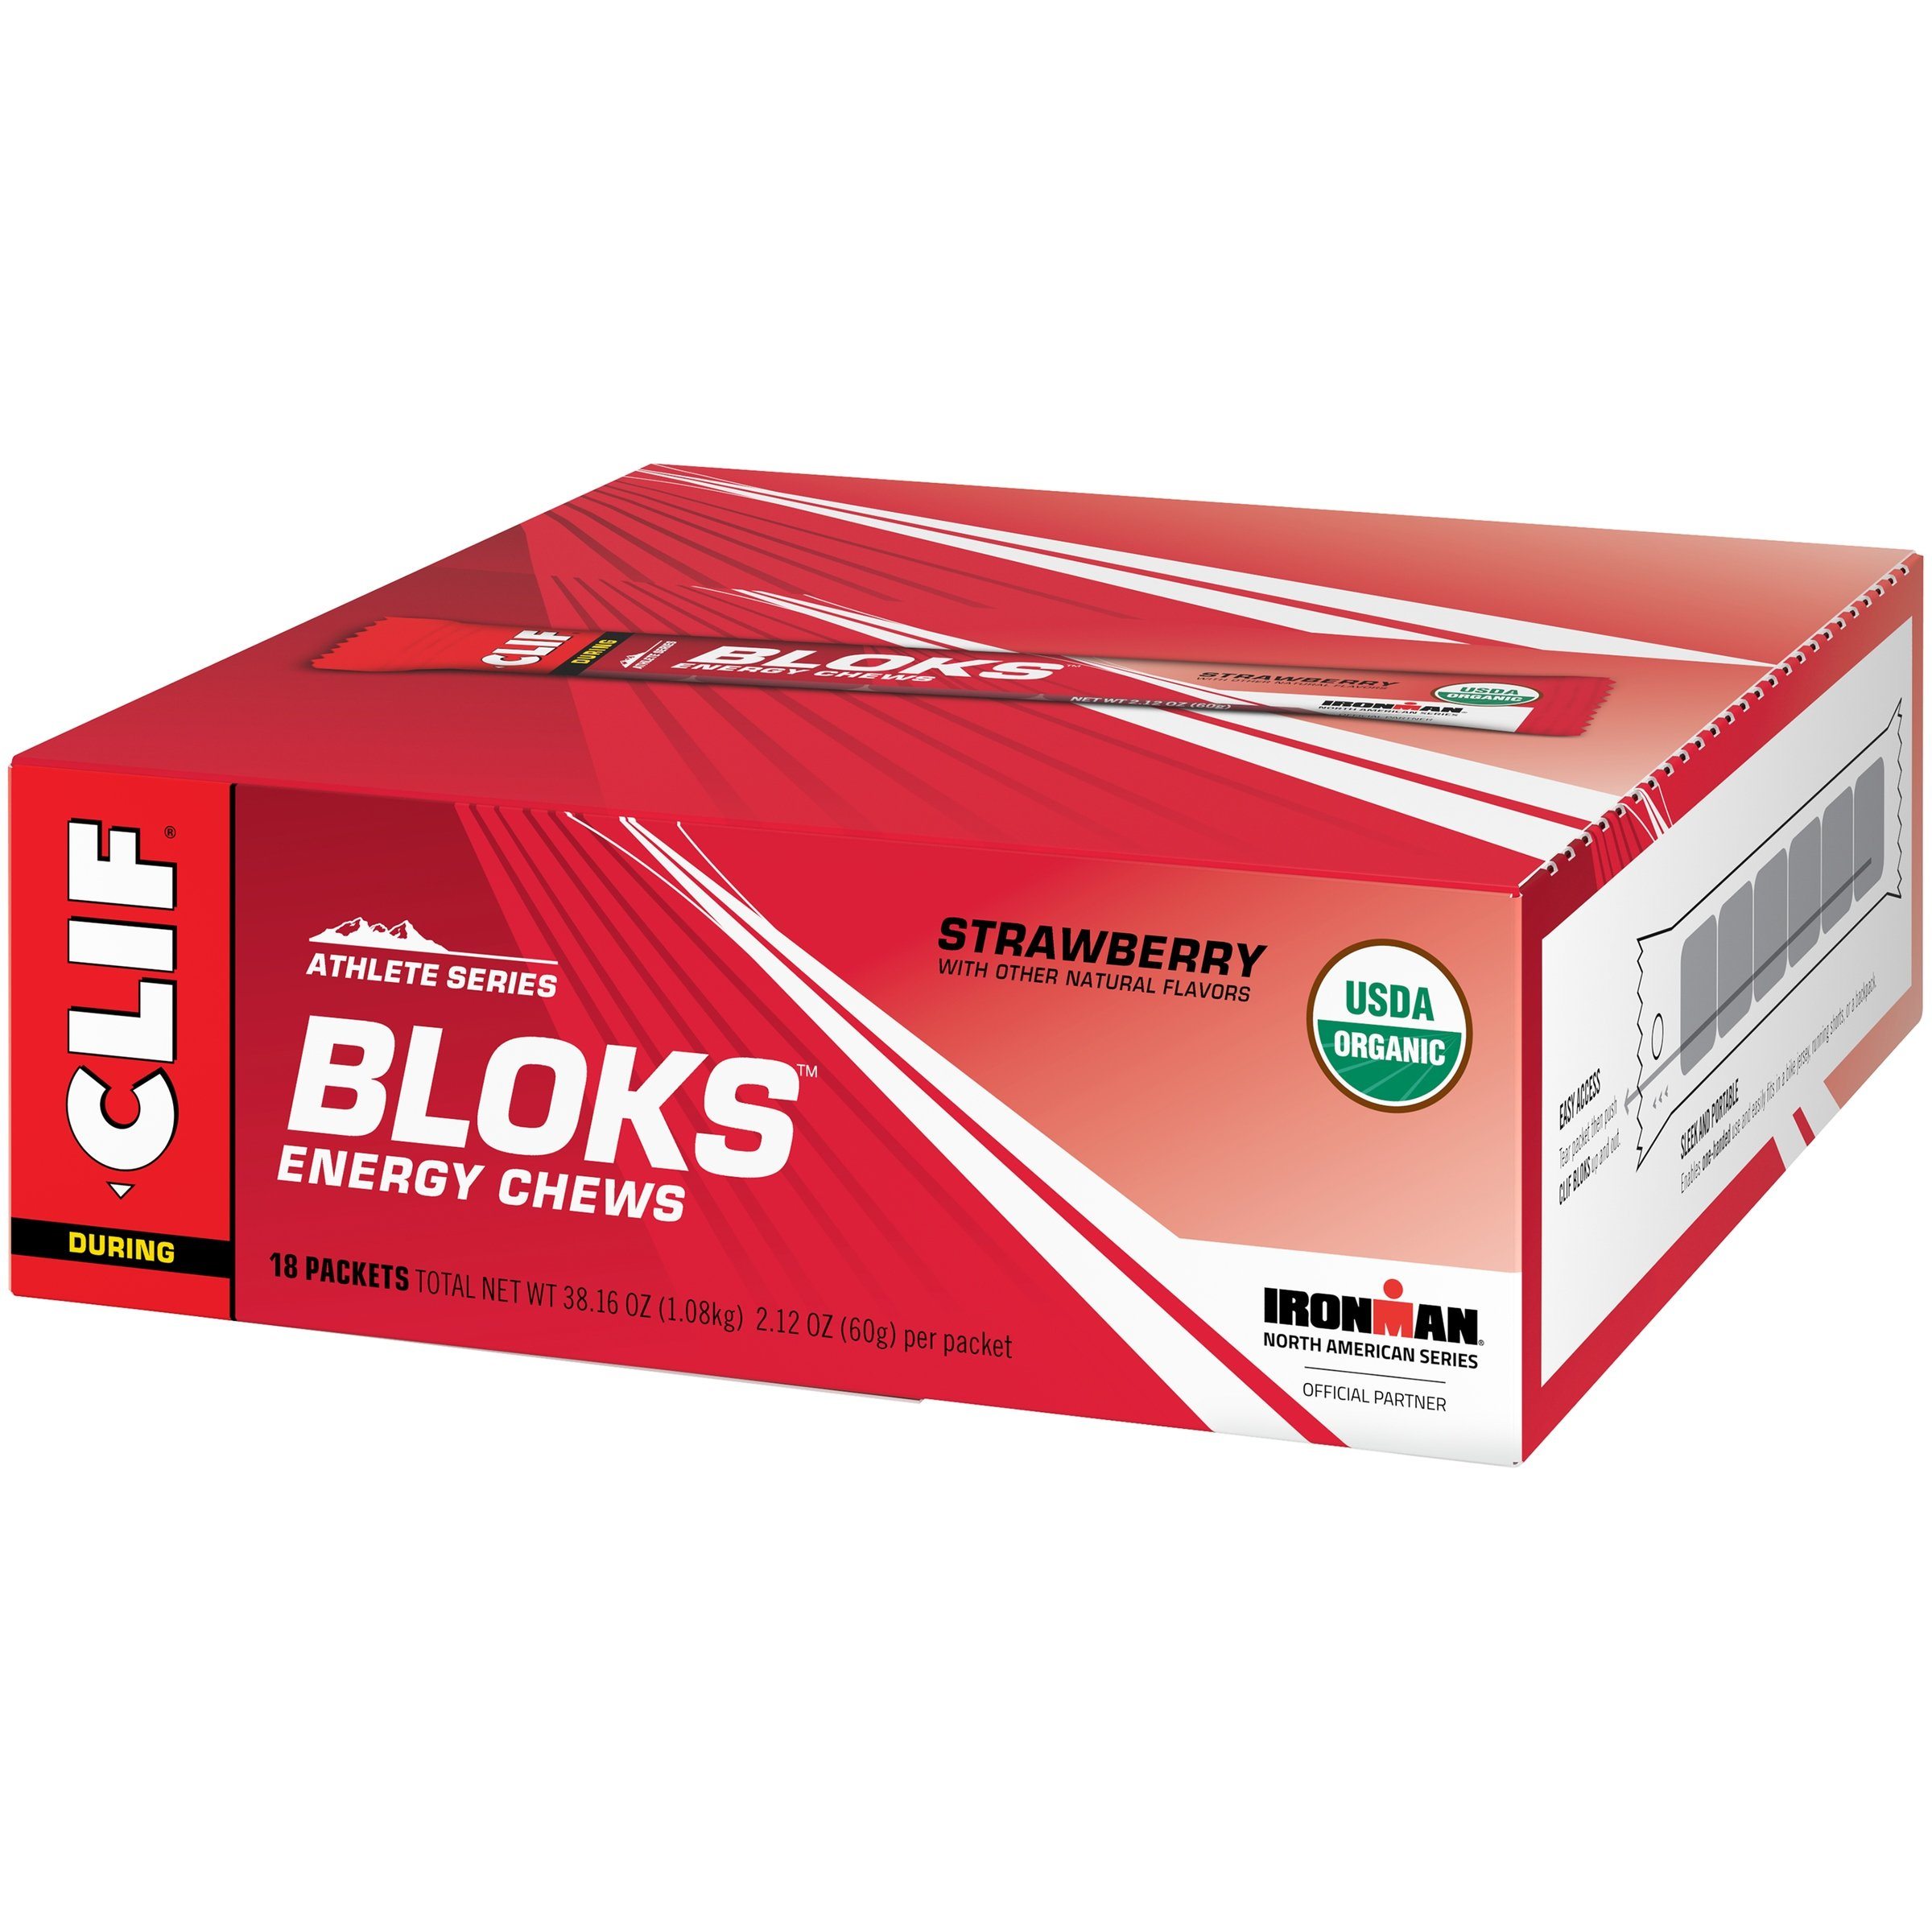 CLIF BLOKS Energy Chews CLIF Strawberry 2.12 Oz-18 Count 